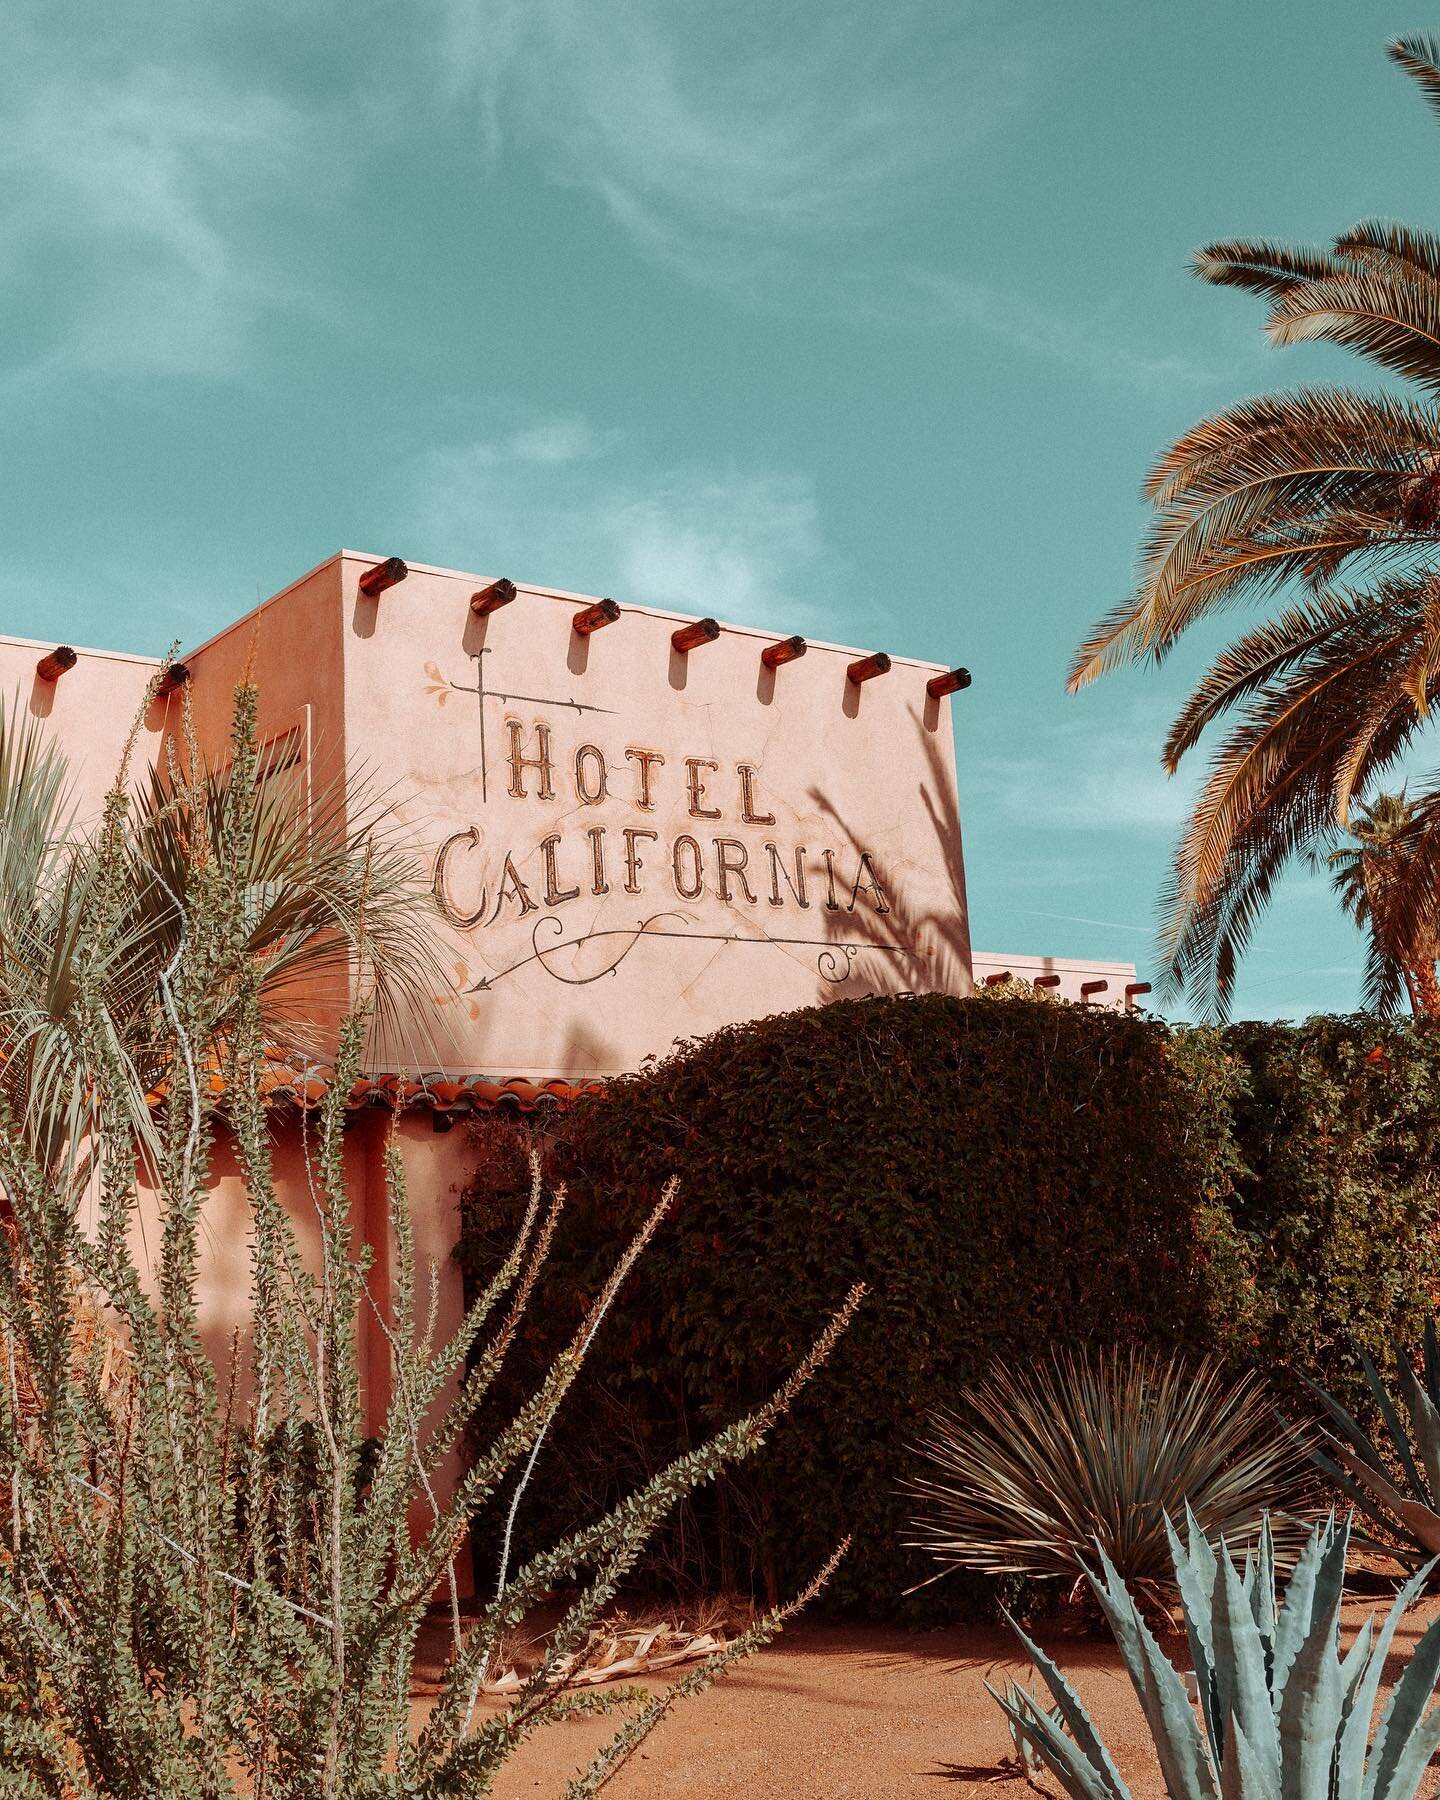 Hotel California. November 22&rsquo;

#california #cali #photooftheday #ps #hotel #californialove #main_vision #everybodystreets #streetphotography #visualvoicemag #californiaadventure #californialove #californiaroadtrip #southerncalifornia #explorec